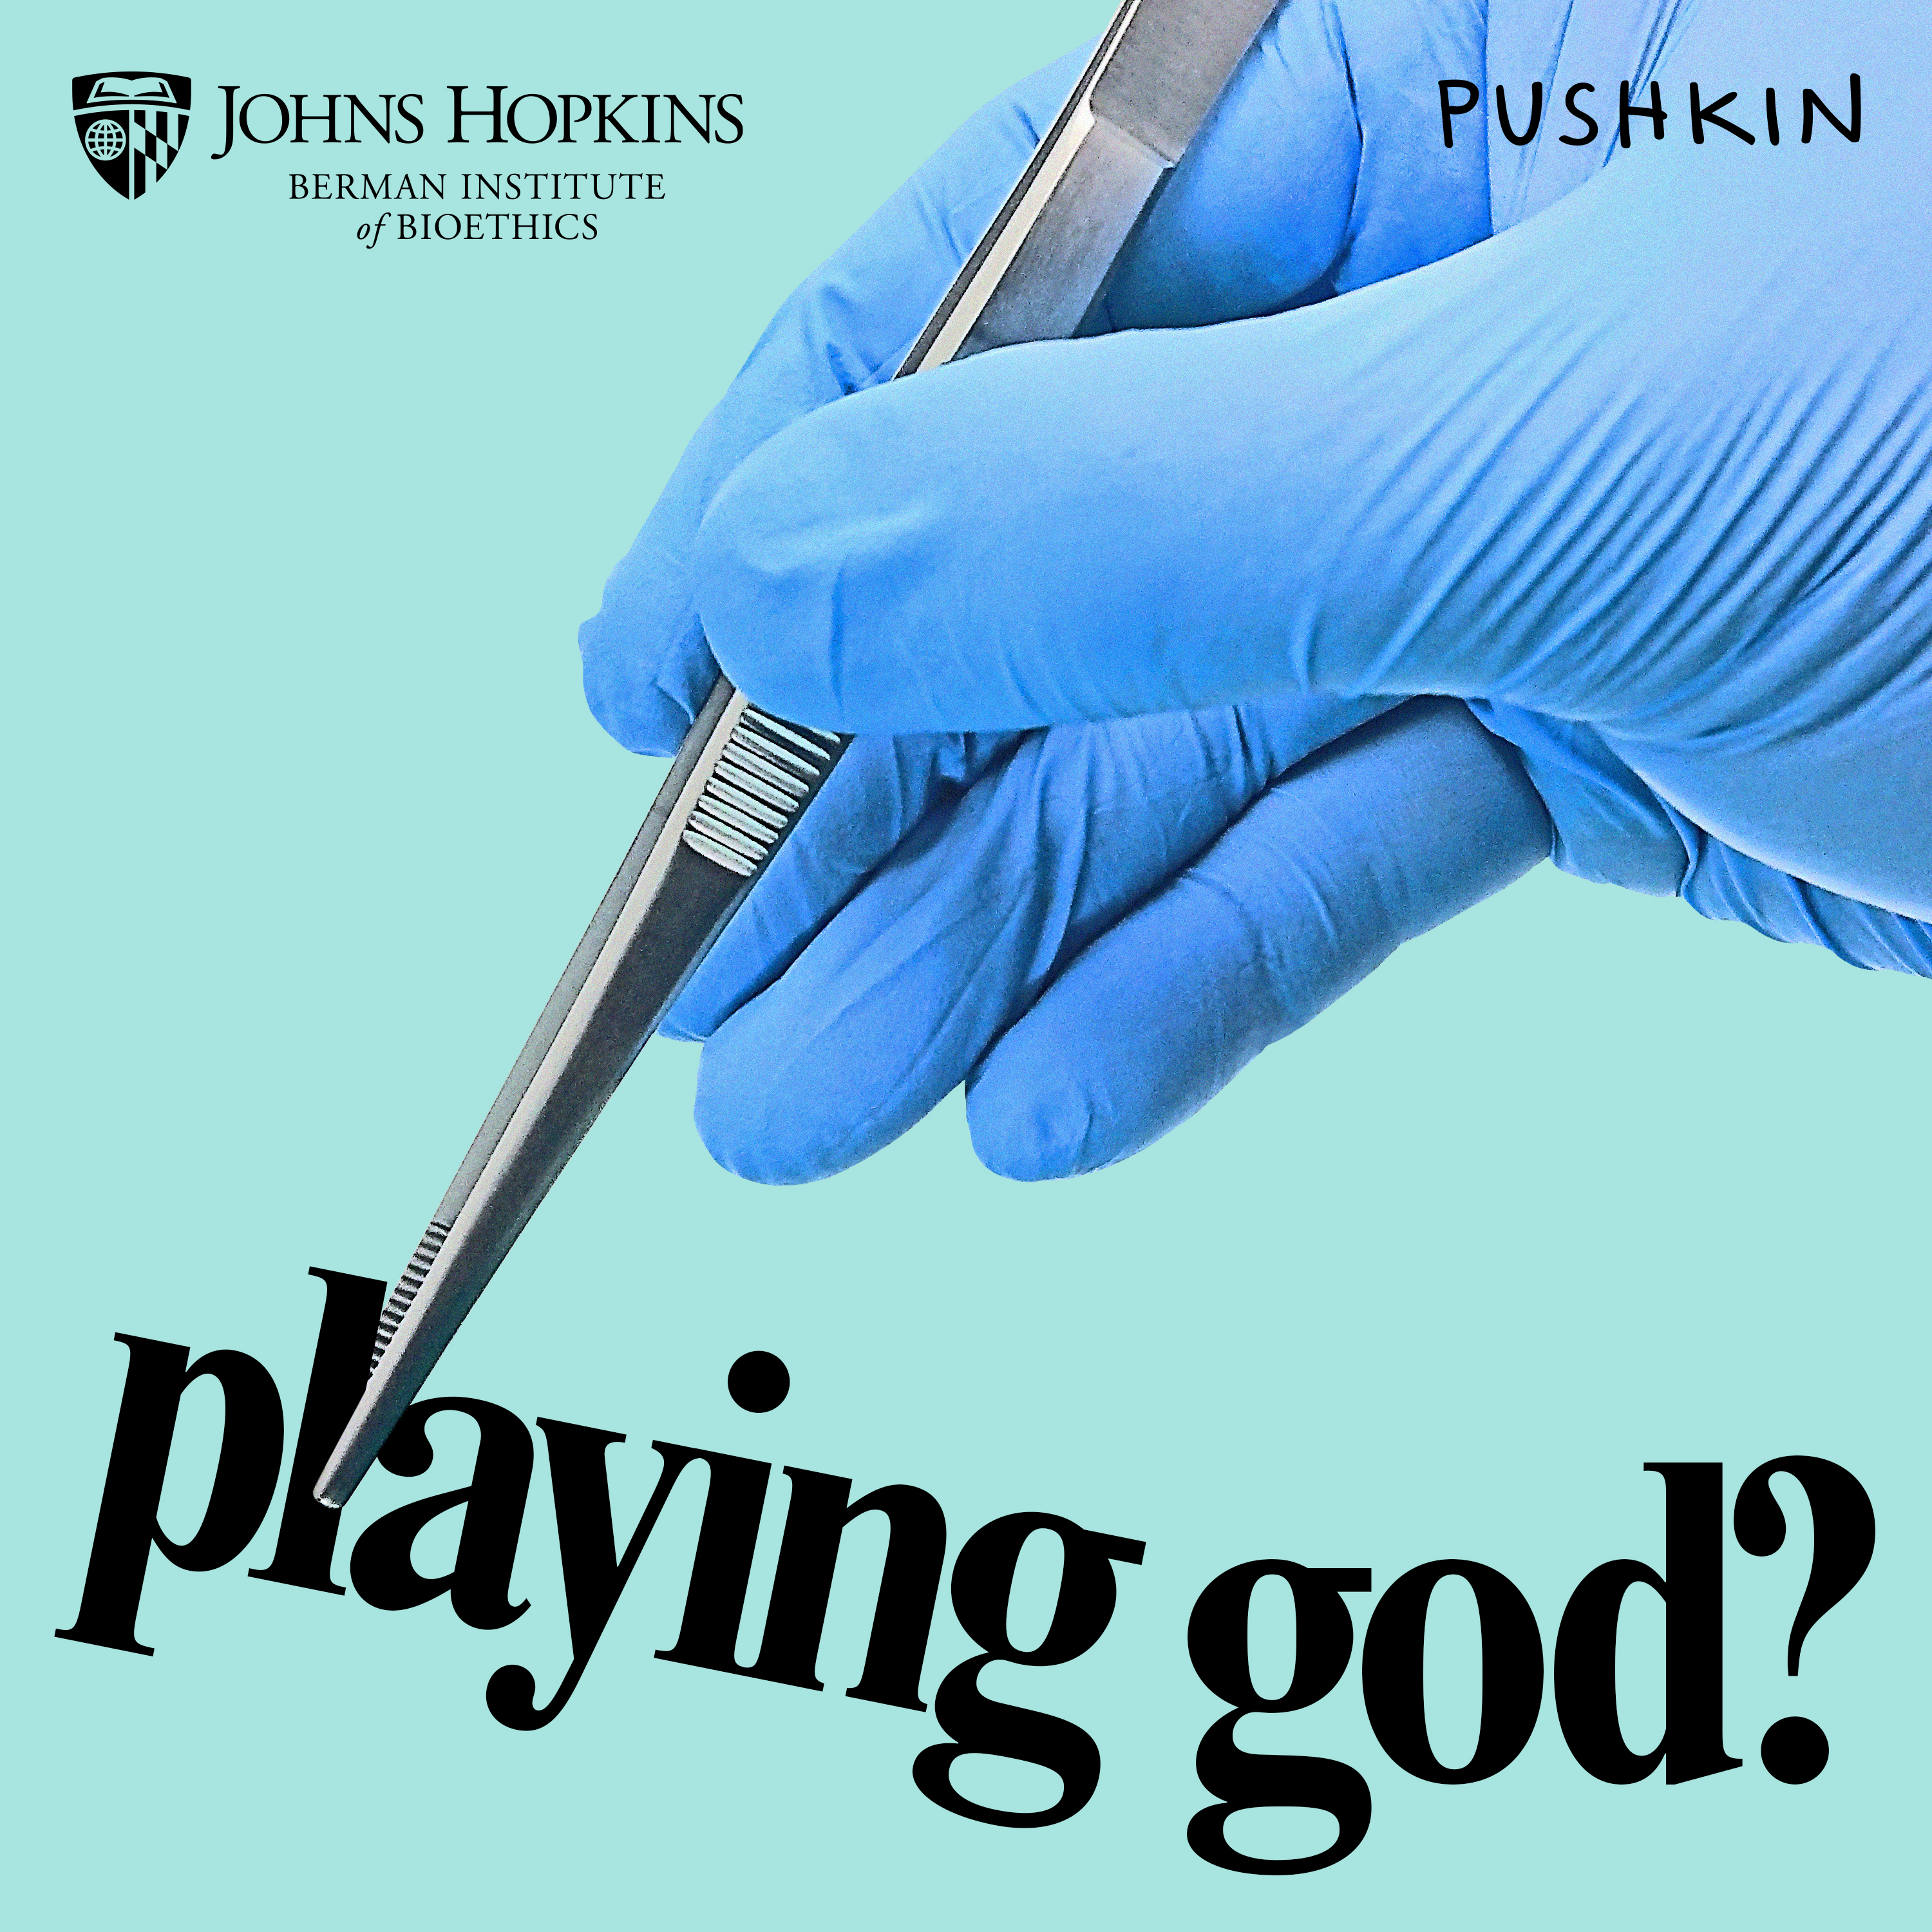 playing god? podcast show image